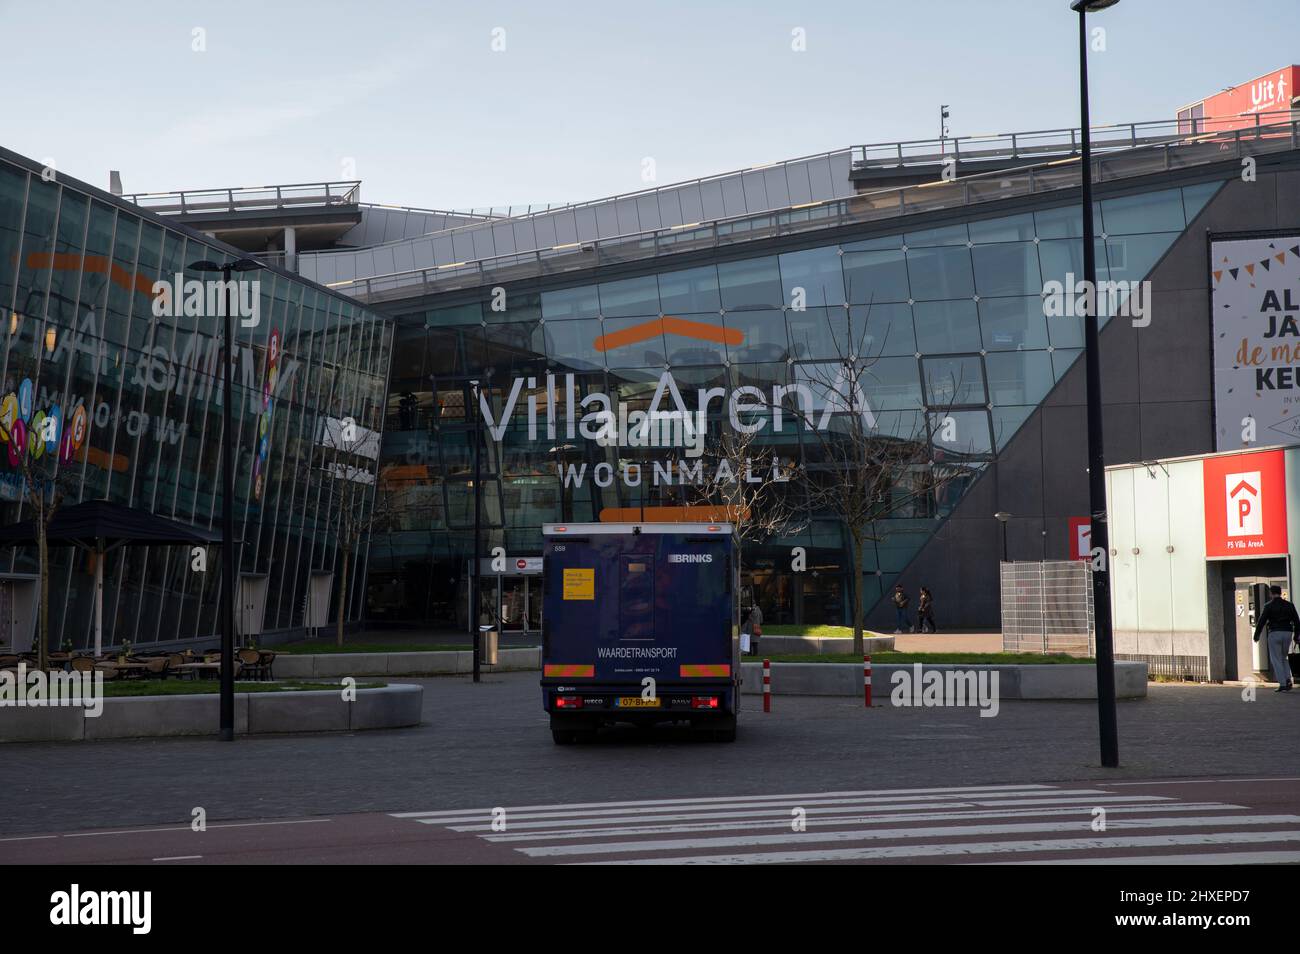 Brinks Company Truck In Der Villa Arena Shopping Mall In Amsterdam, Niederlande 11-3-2022 Stockfoto